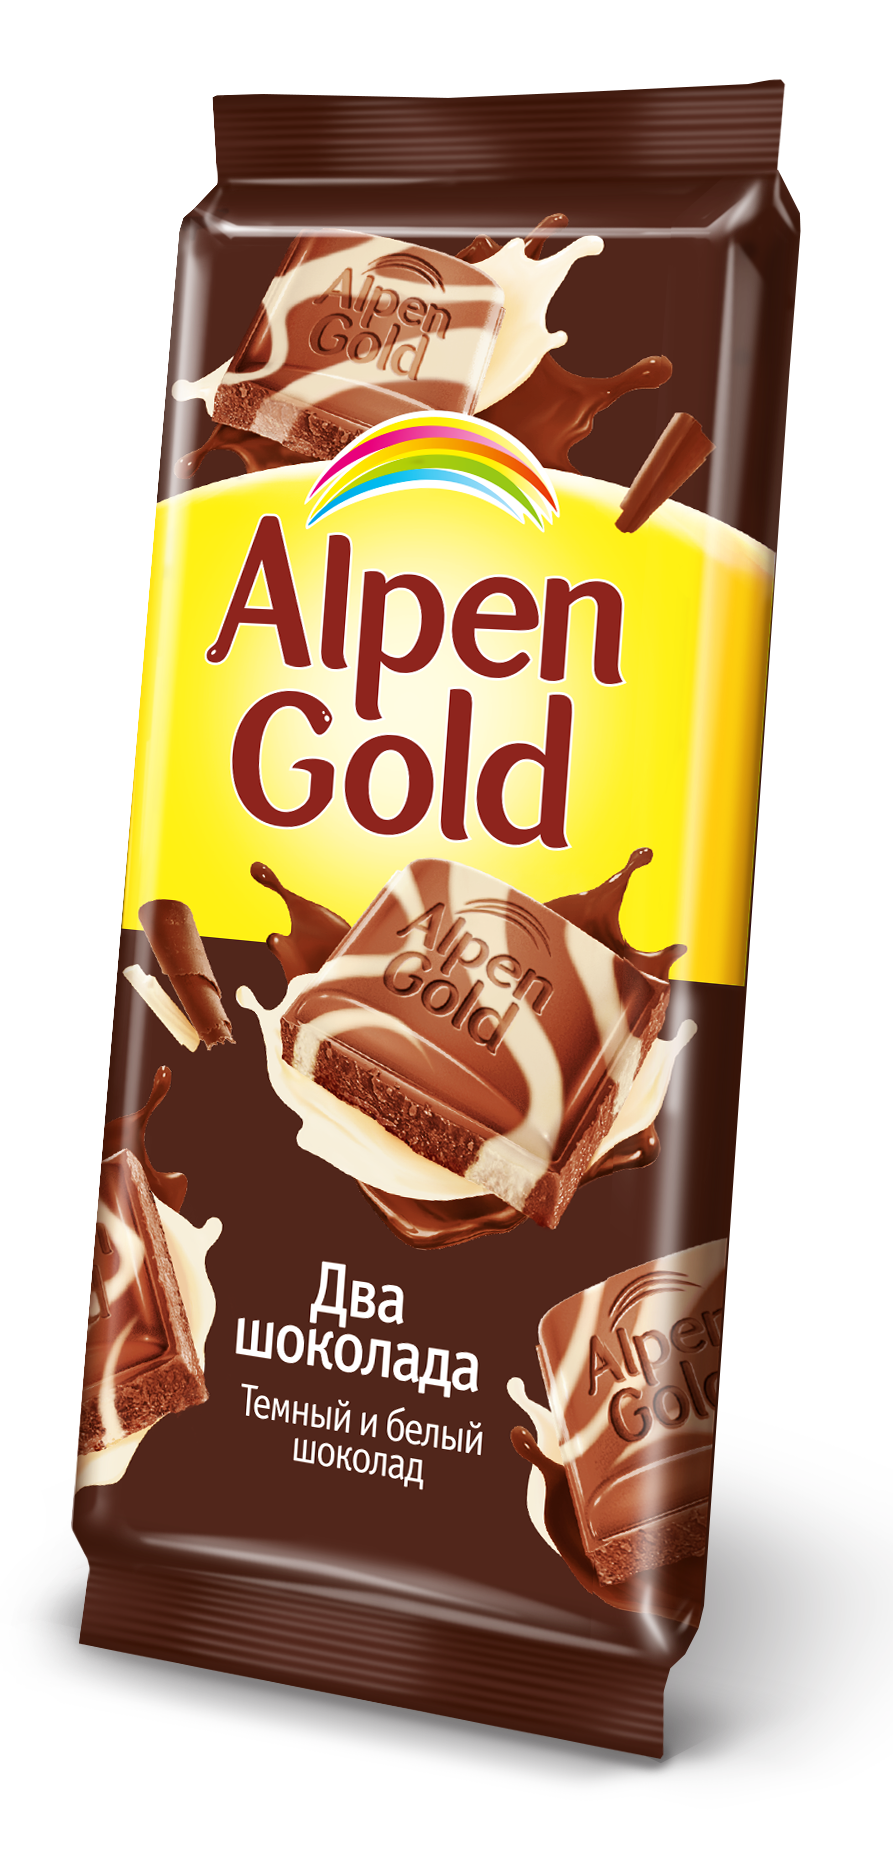 Альпен Гольд 2 шоколада. Альпен Гольд два шоколада. Плитка шоколада Альпен Гольд. Шоколад Альпен Гольд 2 шоколада.